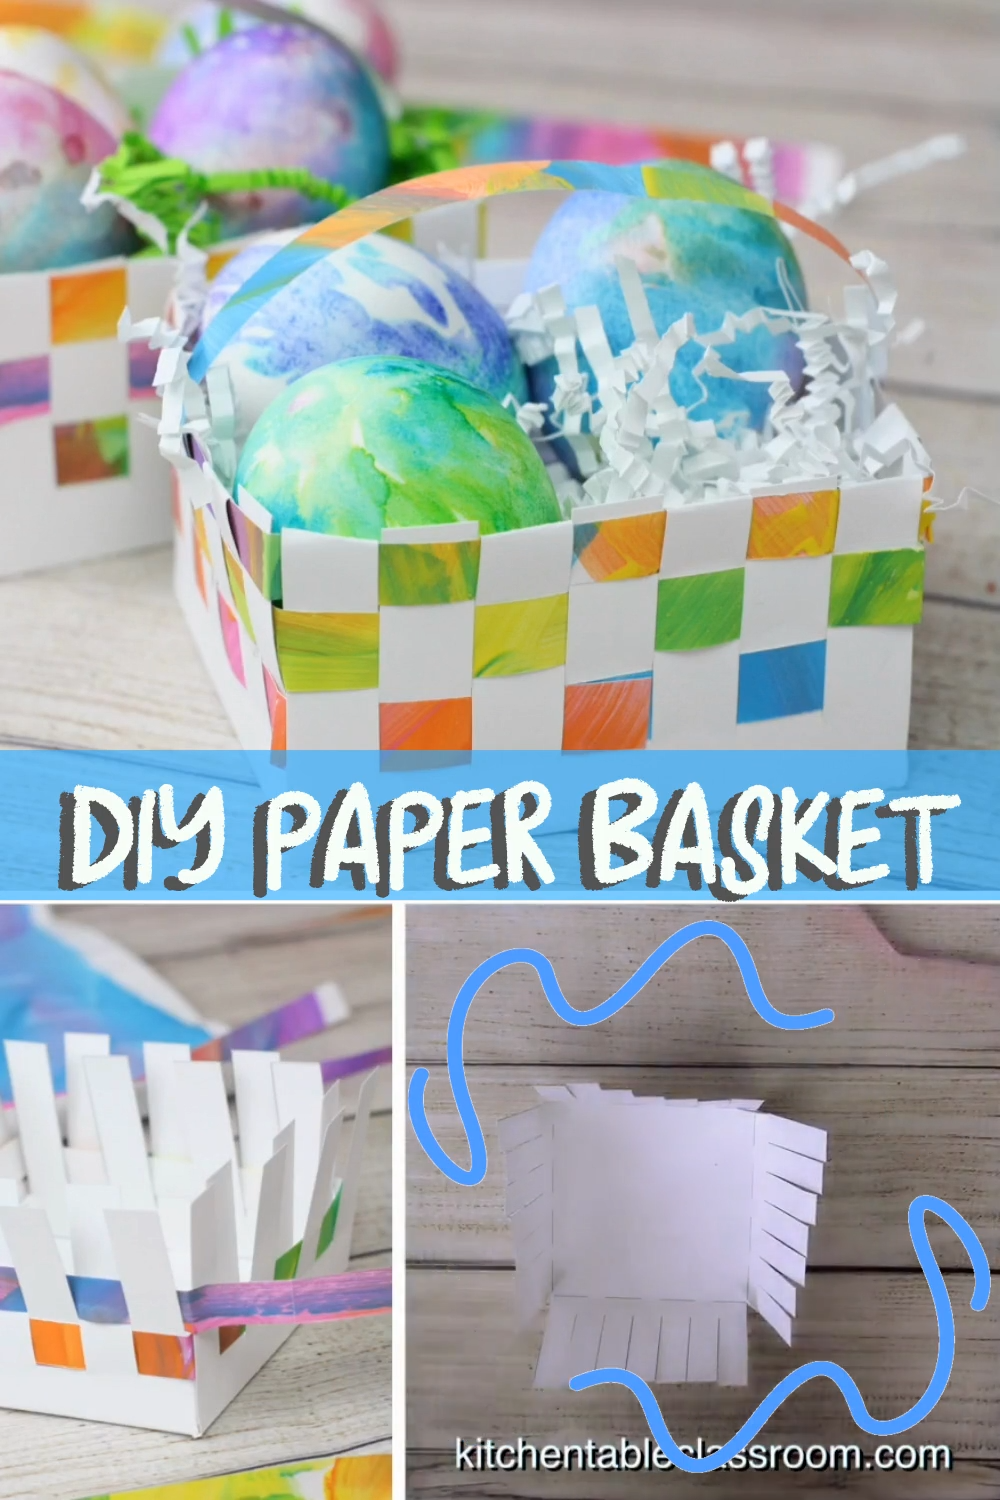 17 diy Paper basket ideas